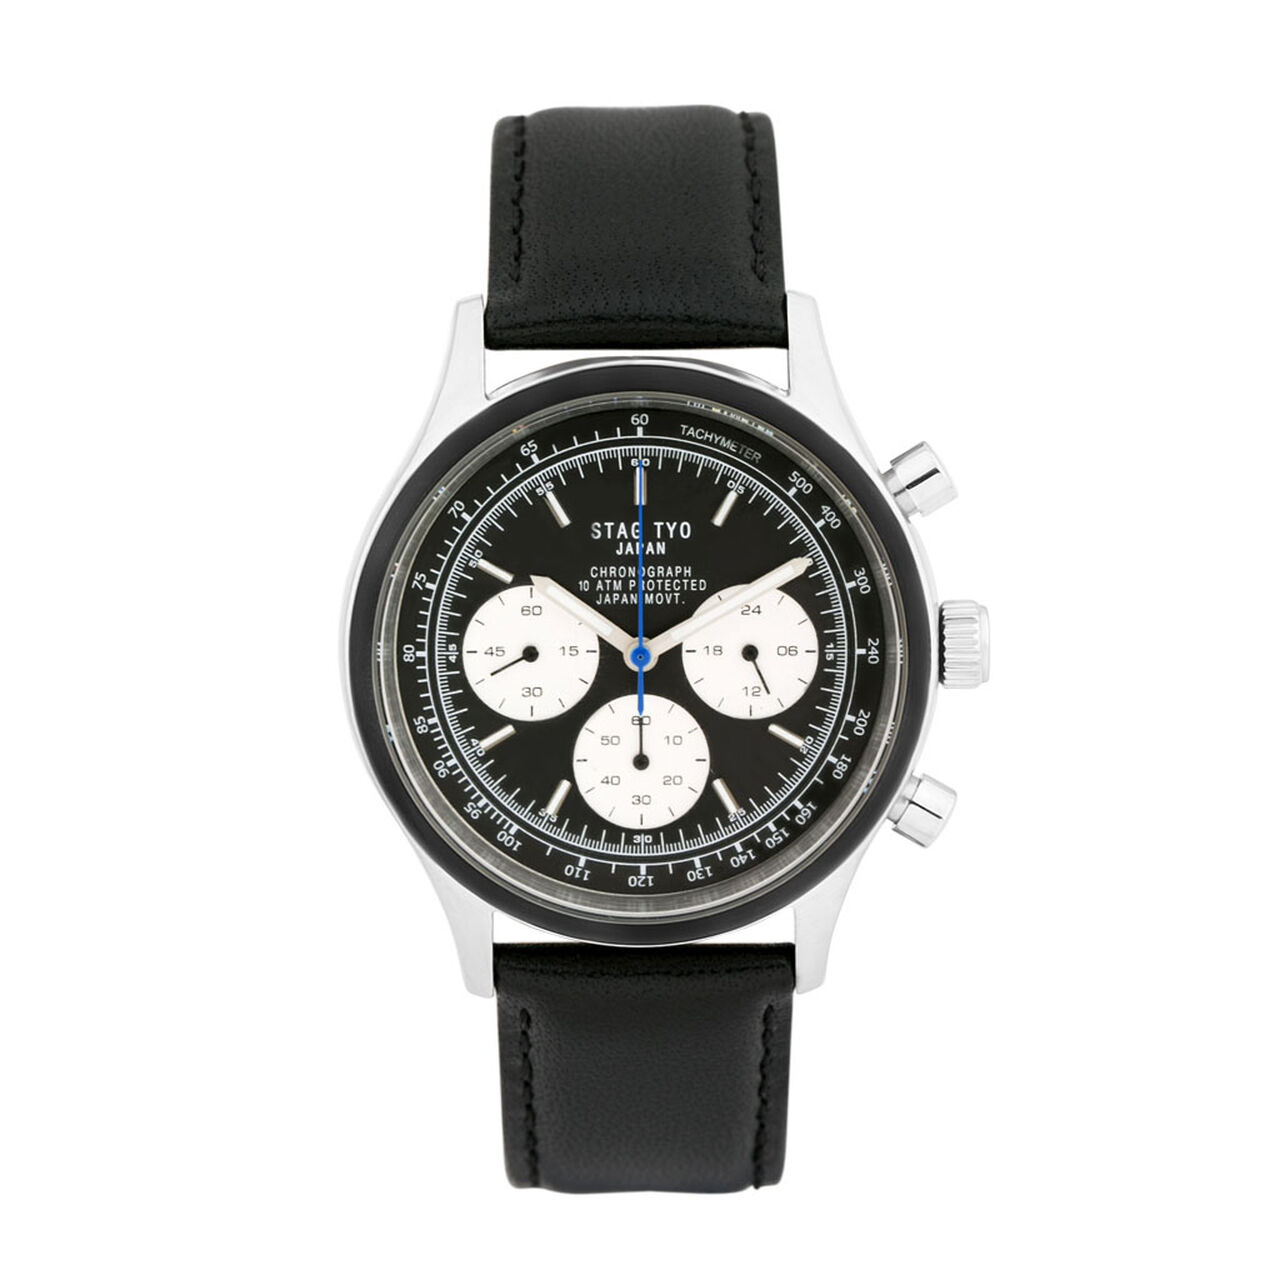 Buy STAG TYO Chronograph 1933 military watch for THB 8414.75 | Maruzeki